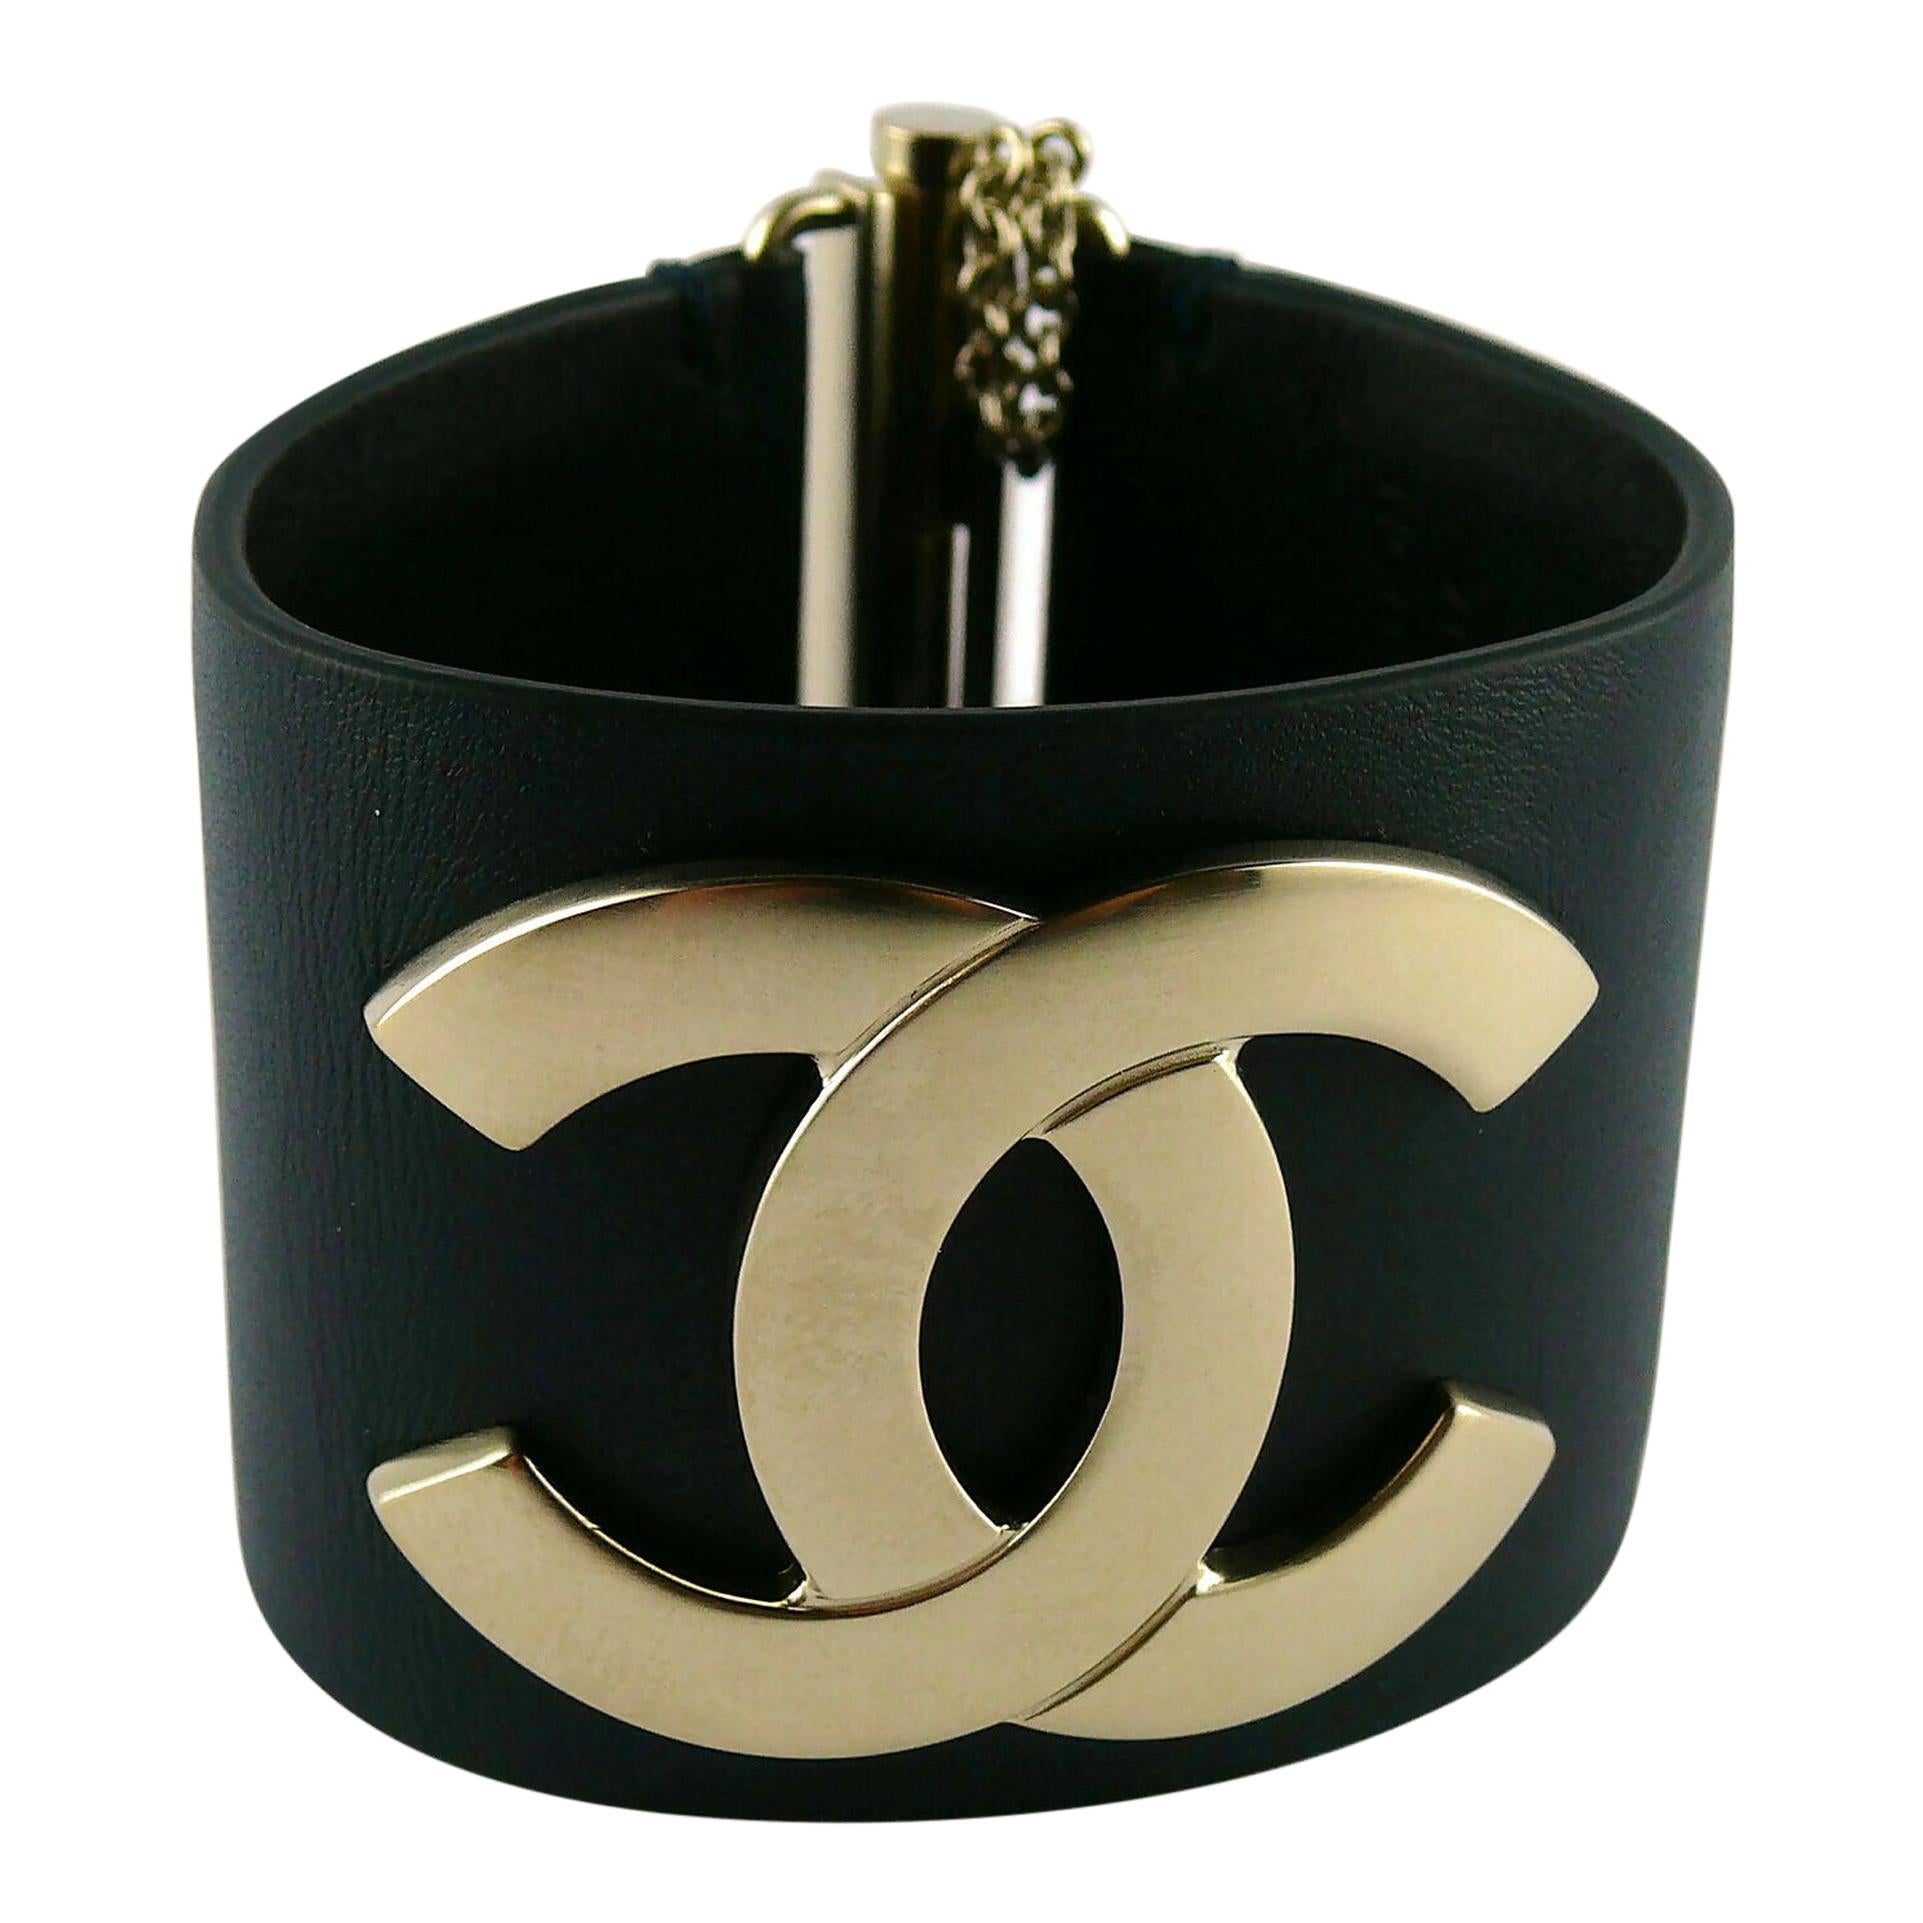 Chanel CC Logo Exclusive Edition 2017 Wide Dark Navy Blue Leather Cuff Bracelet